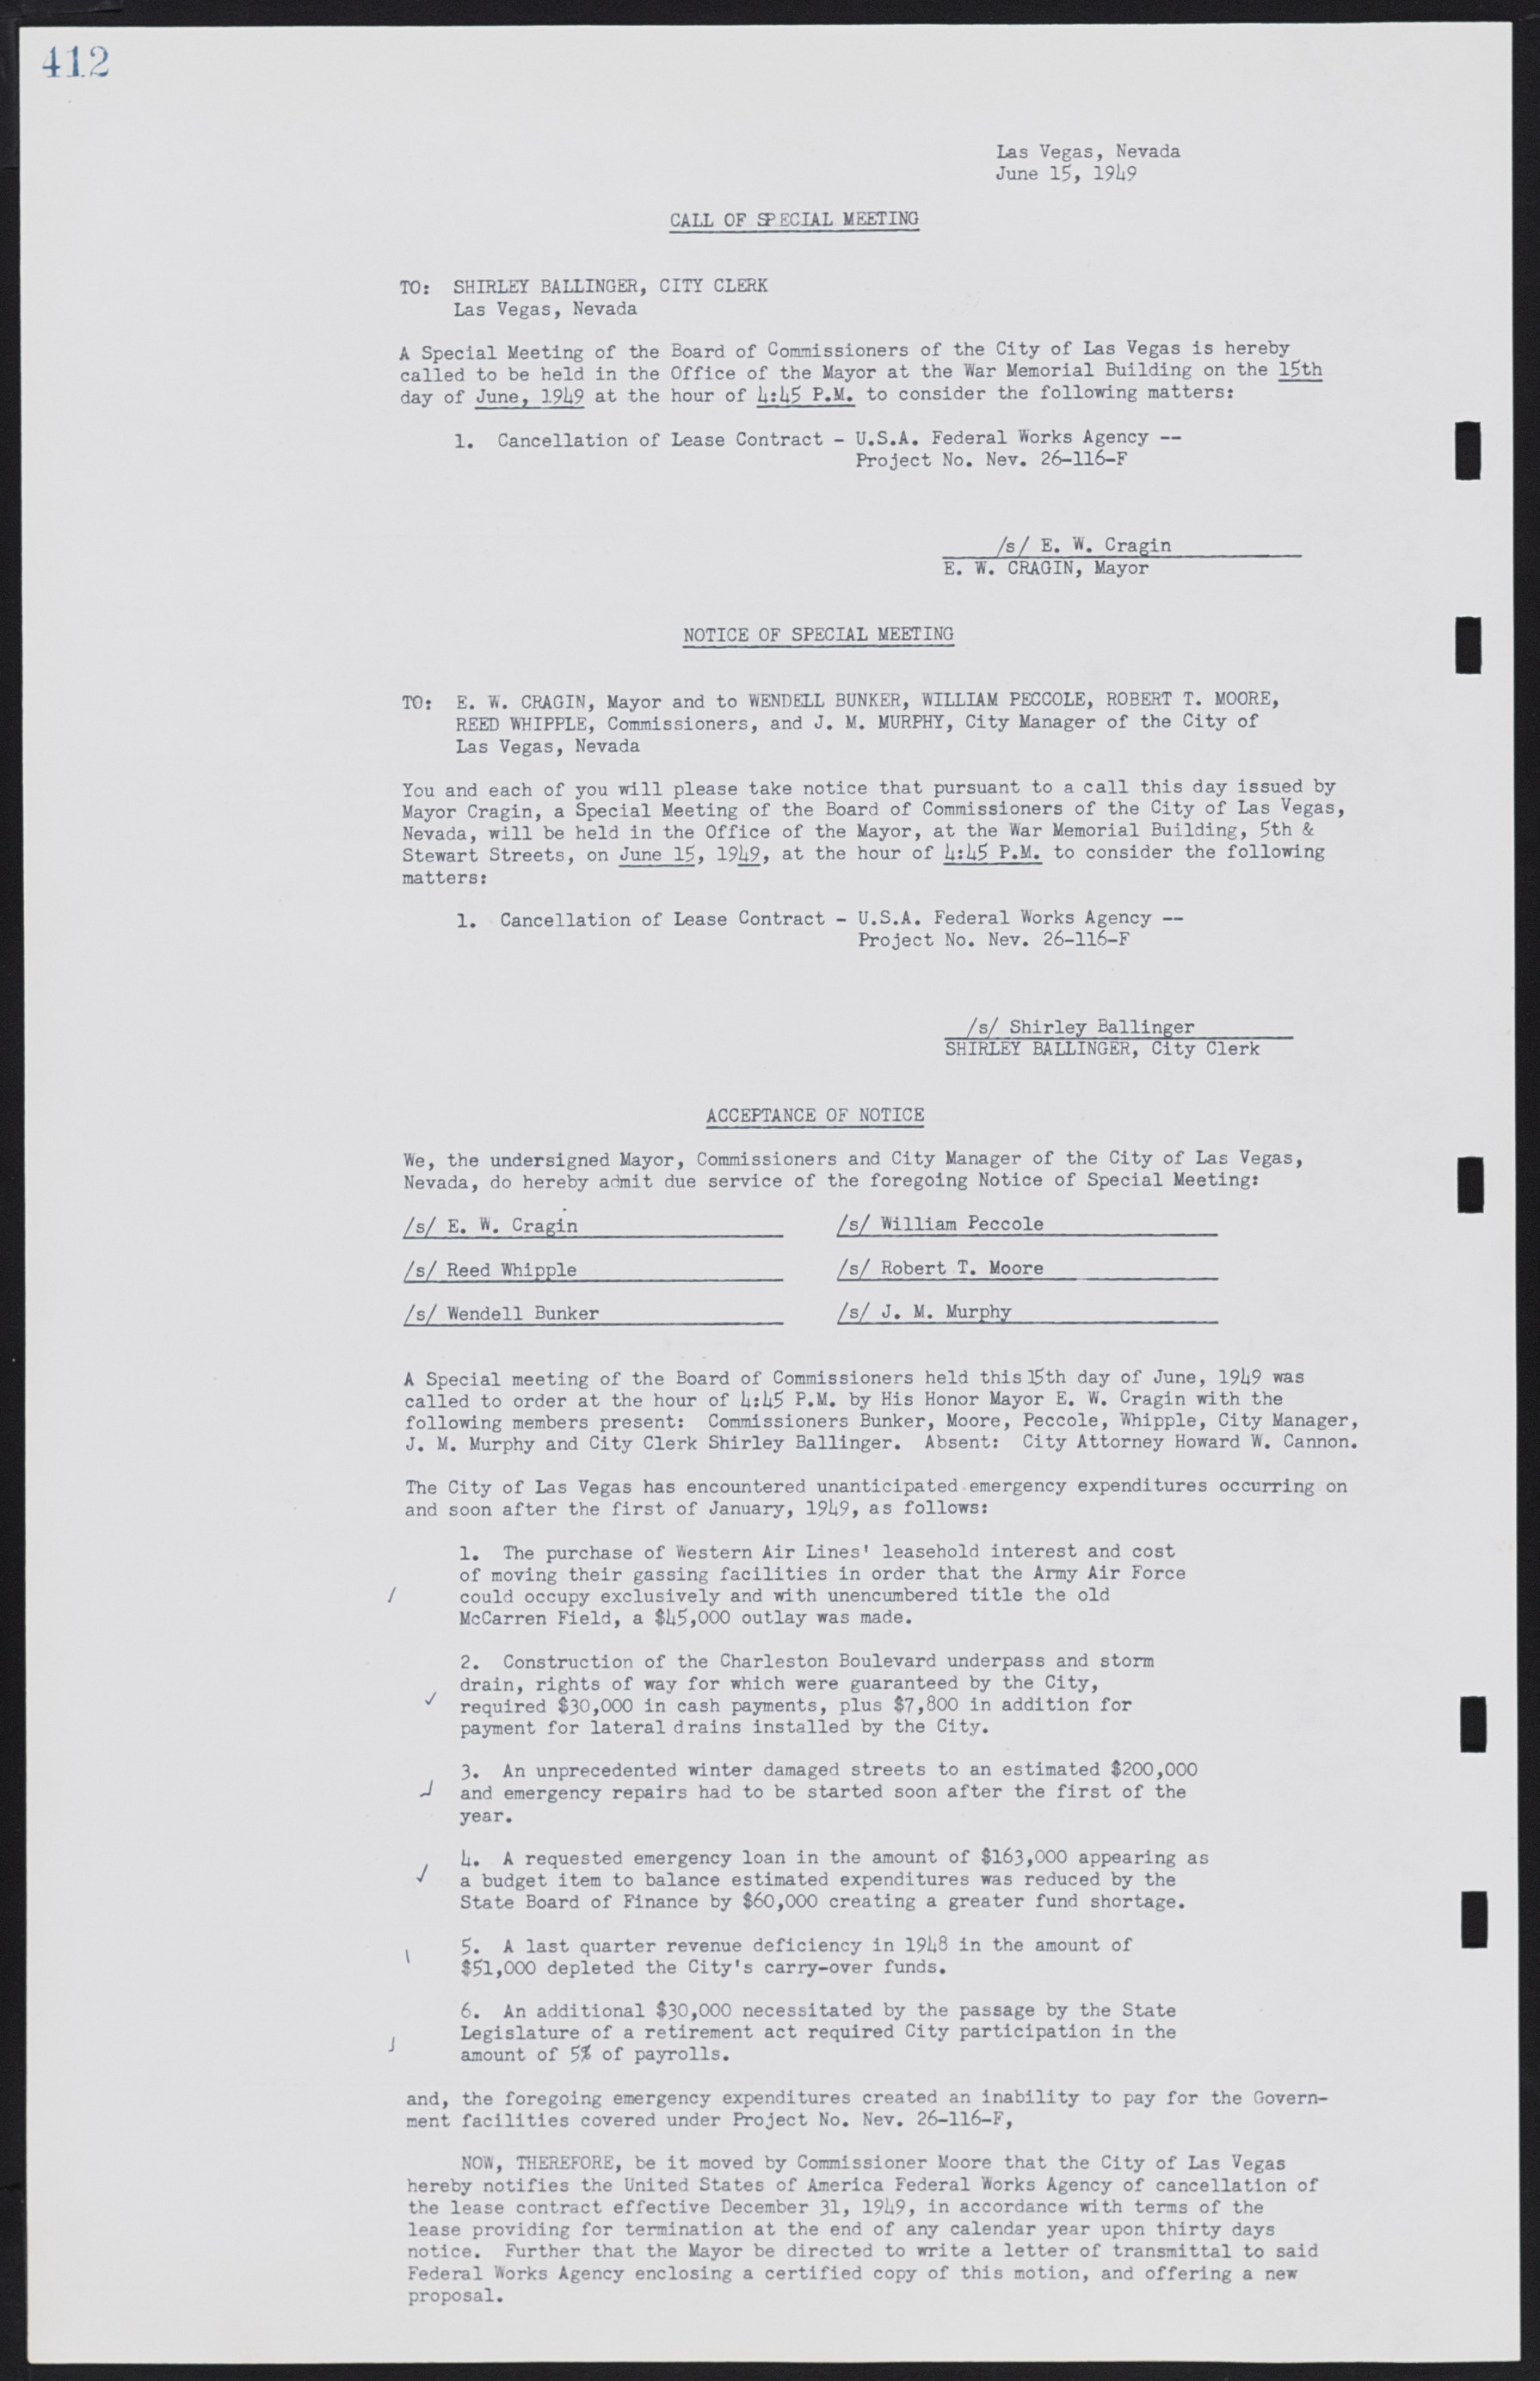 Las Vegas City Commission Minutes, January 7, 1947 to October 26, 1949, lvc000006-442